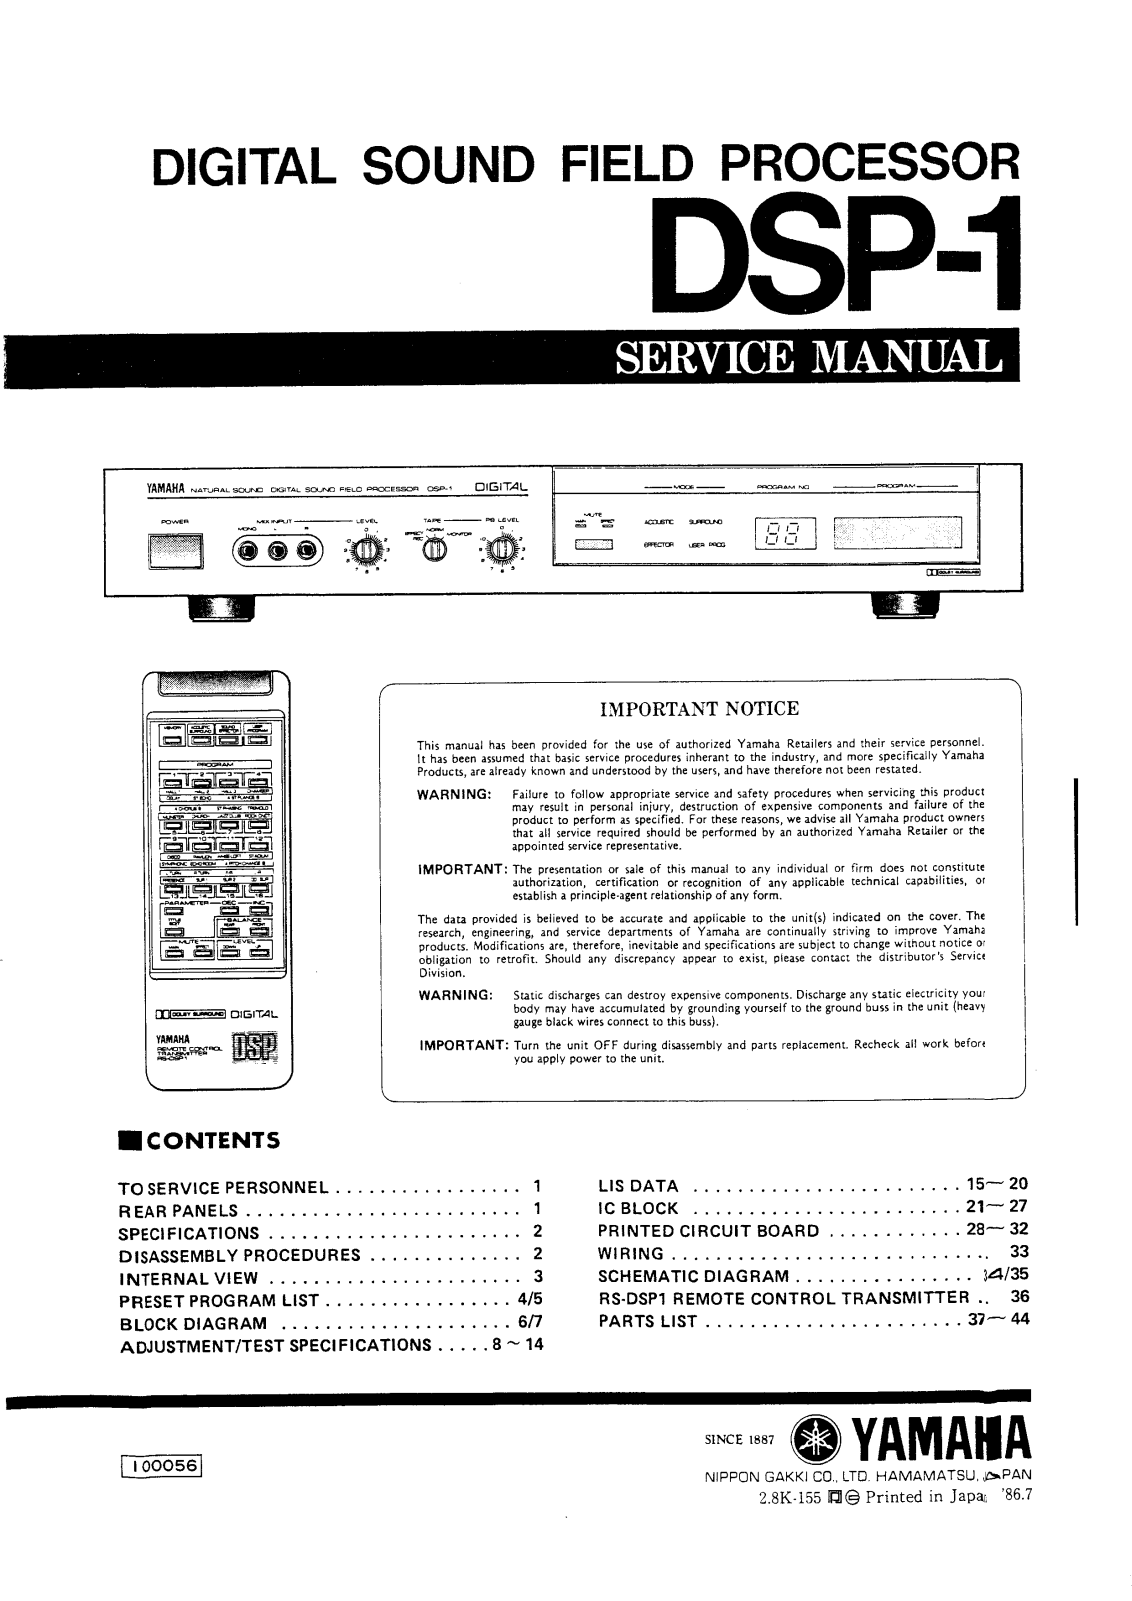 Yamaha DSP-1 Service Manual